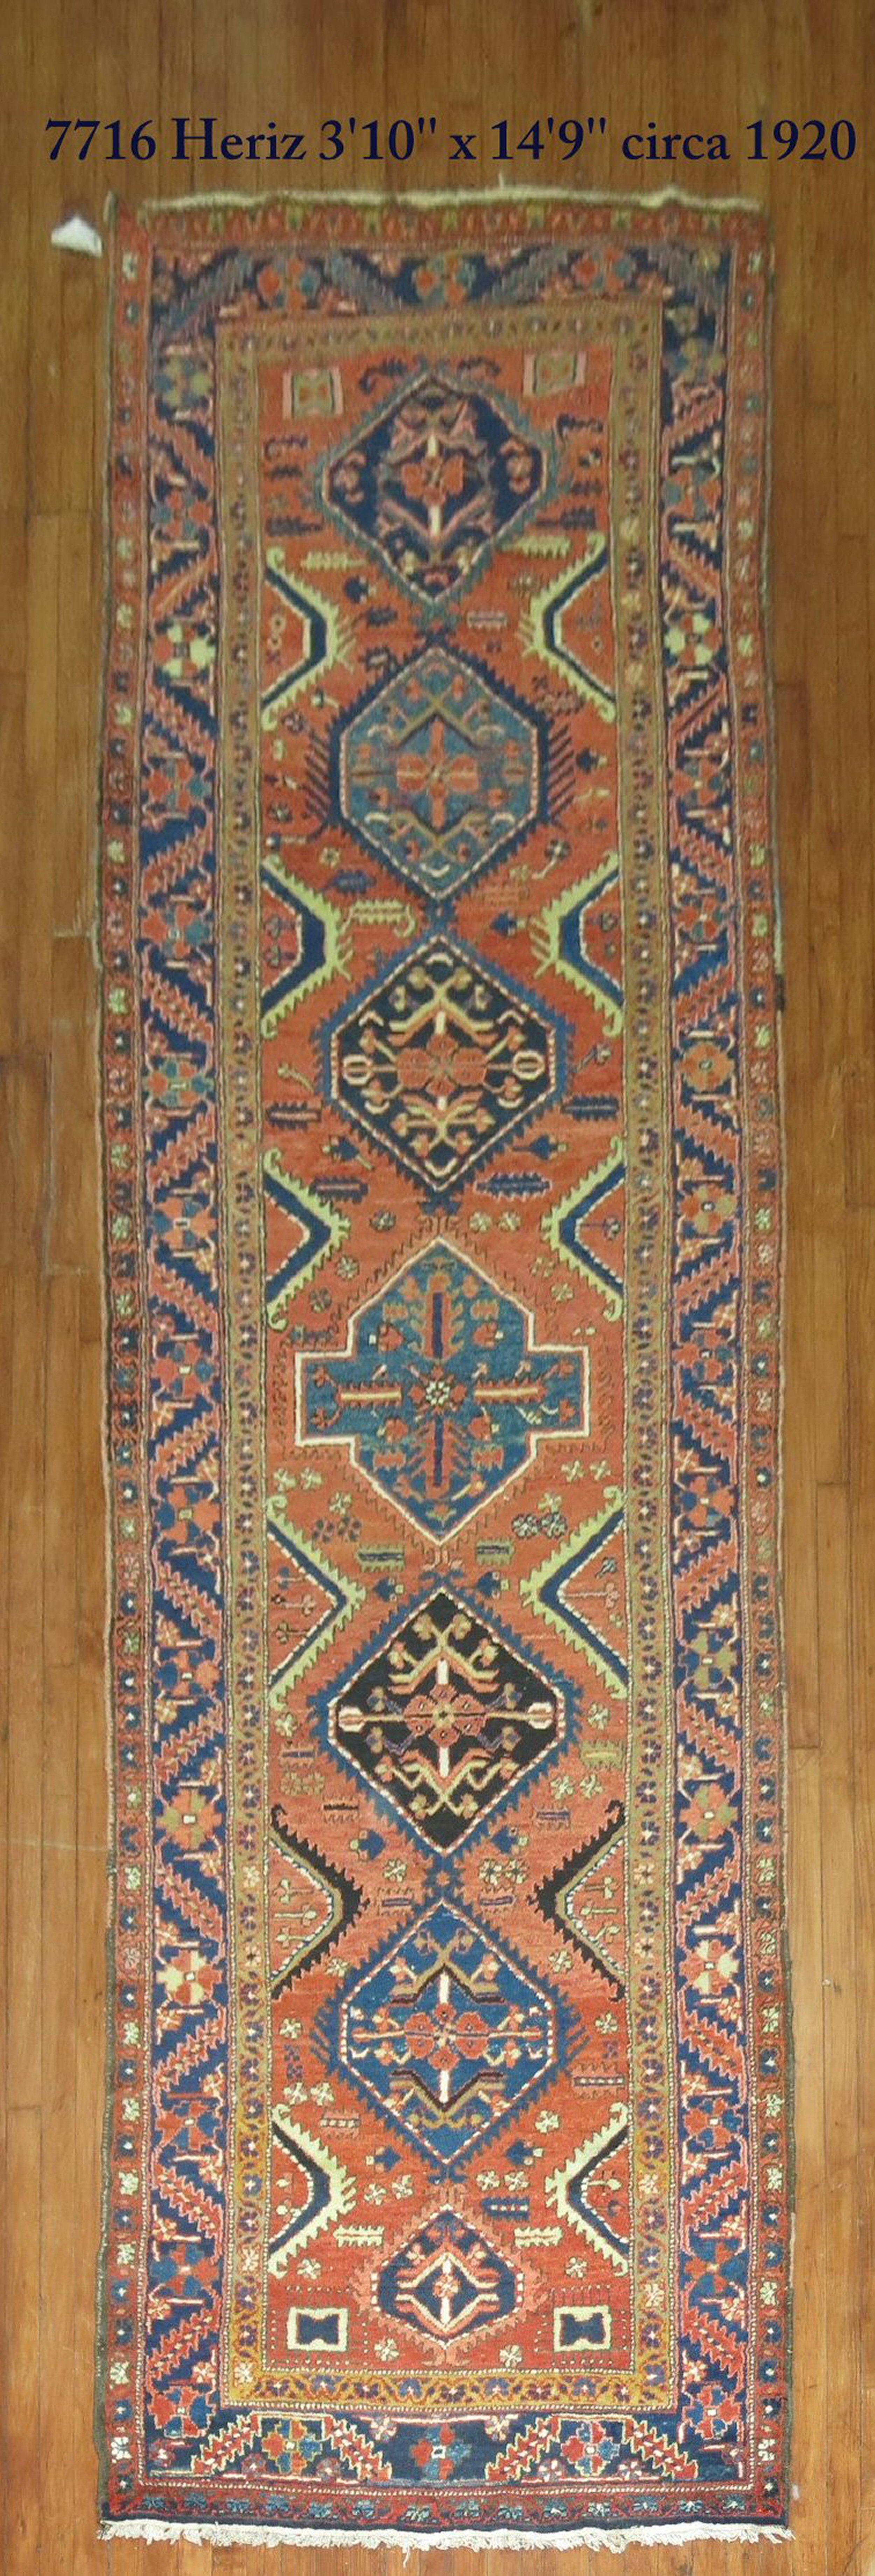 Full pile wide and long rare persian heriz geometric traditional antique runner.

Measures: 3'10'' x 14'9''.